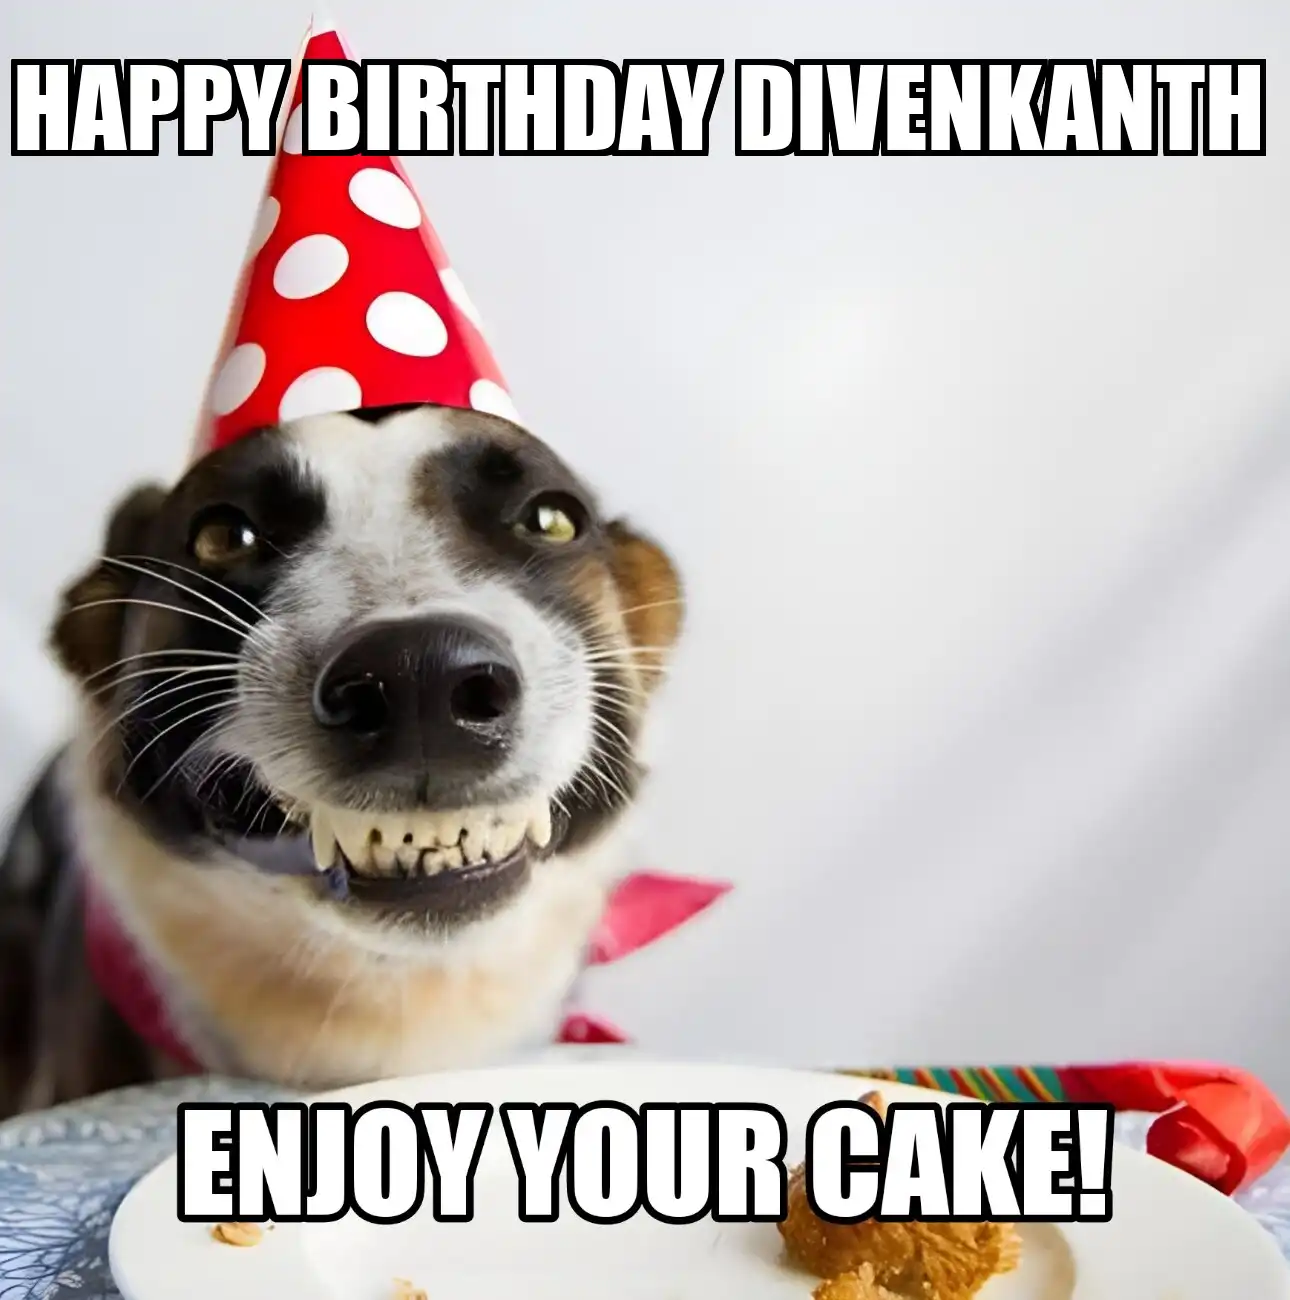 Happy Birthday Divenkanth Enjoy Your Cake Dog Meme